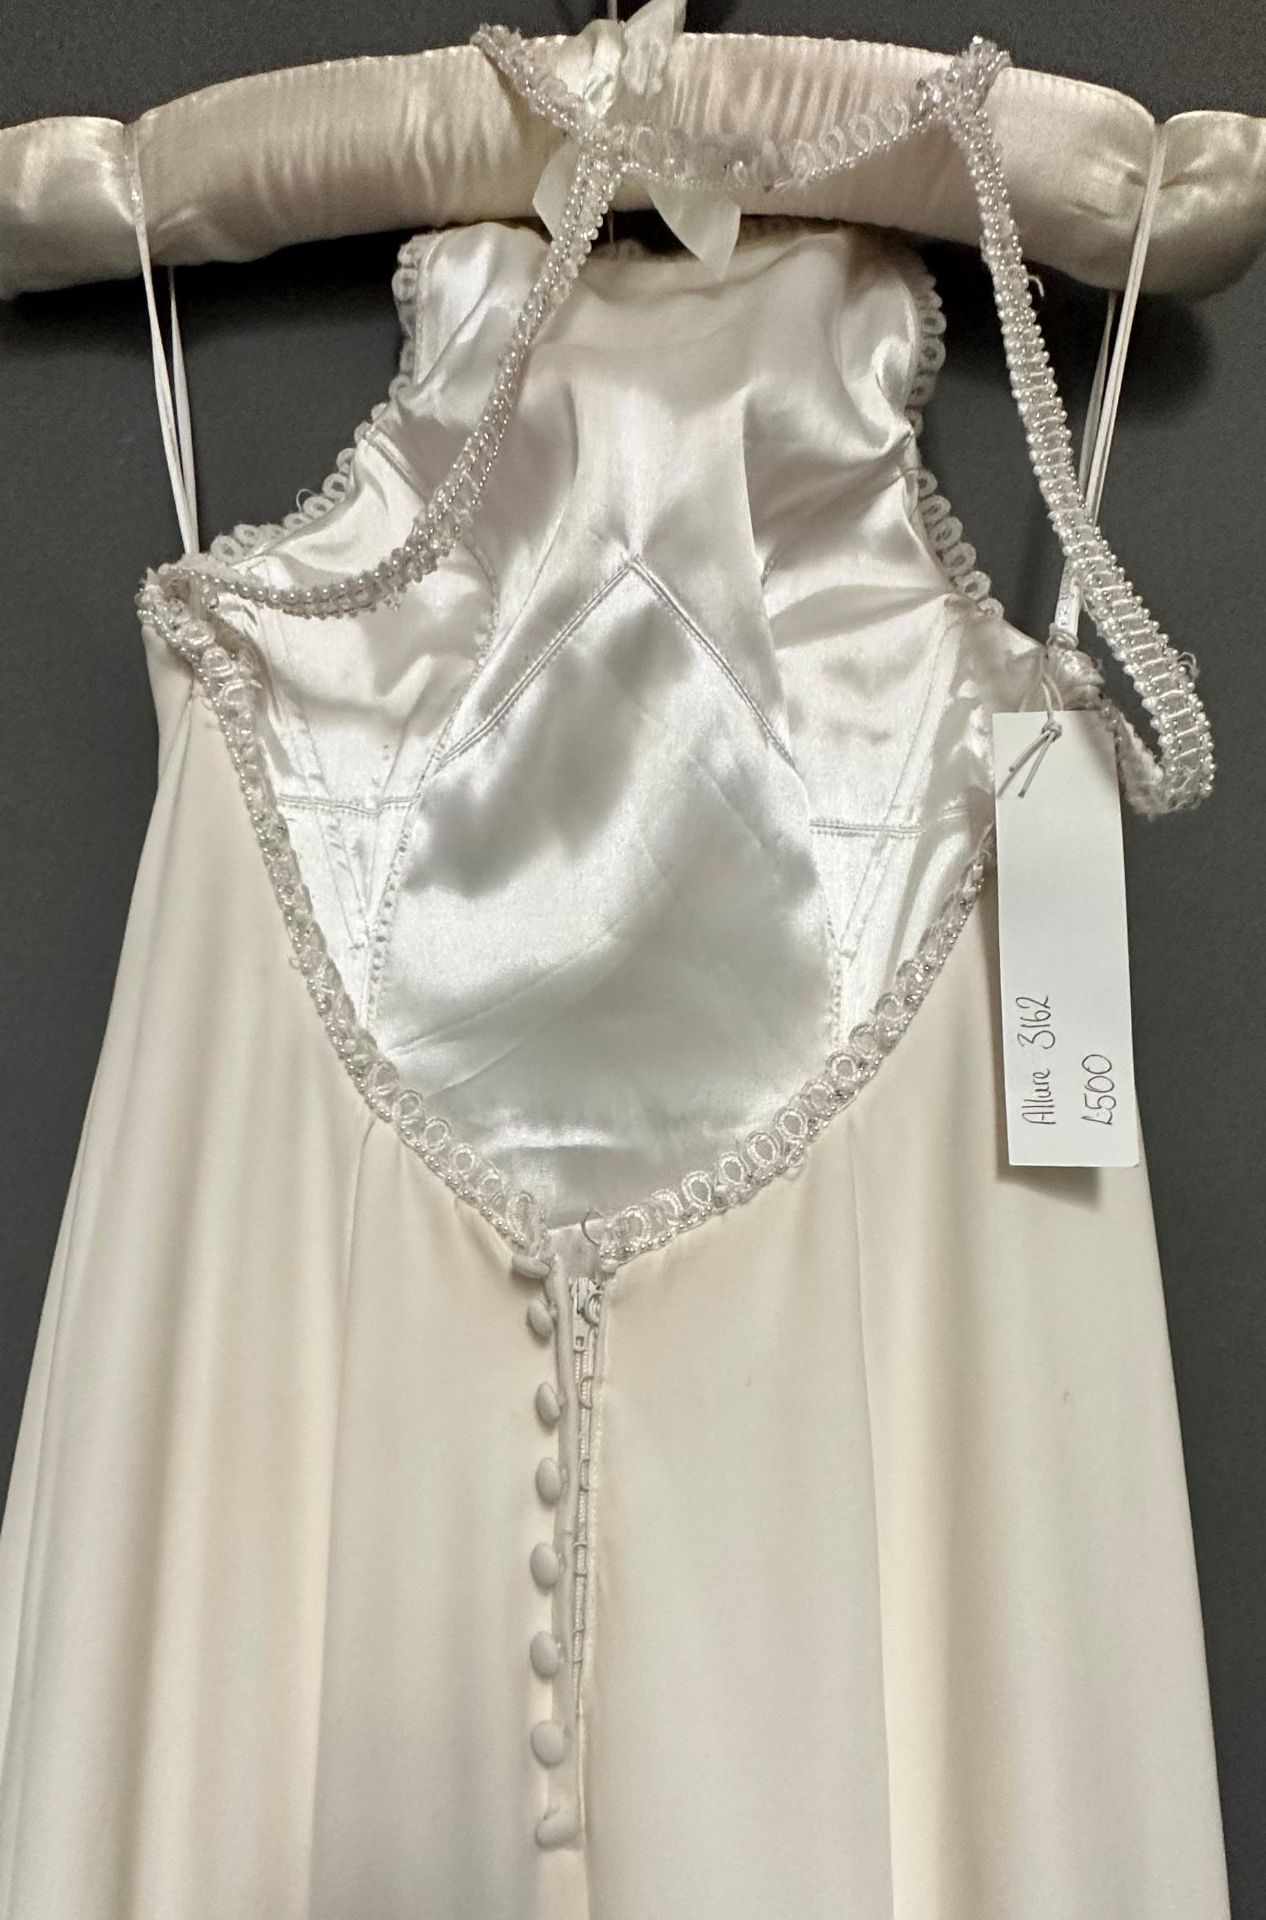 1 x REBECCA INGRAM Silk Crepe, Beaded Designer Wedding Dress Bridal Gown RRP £1,100 UK 12 - Image 3 of 5